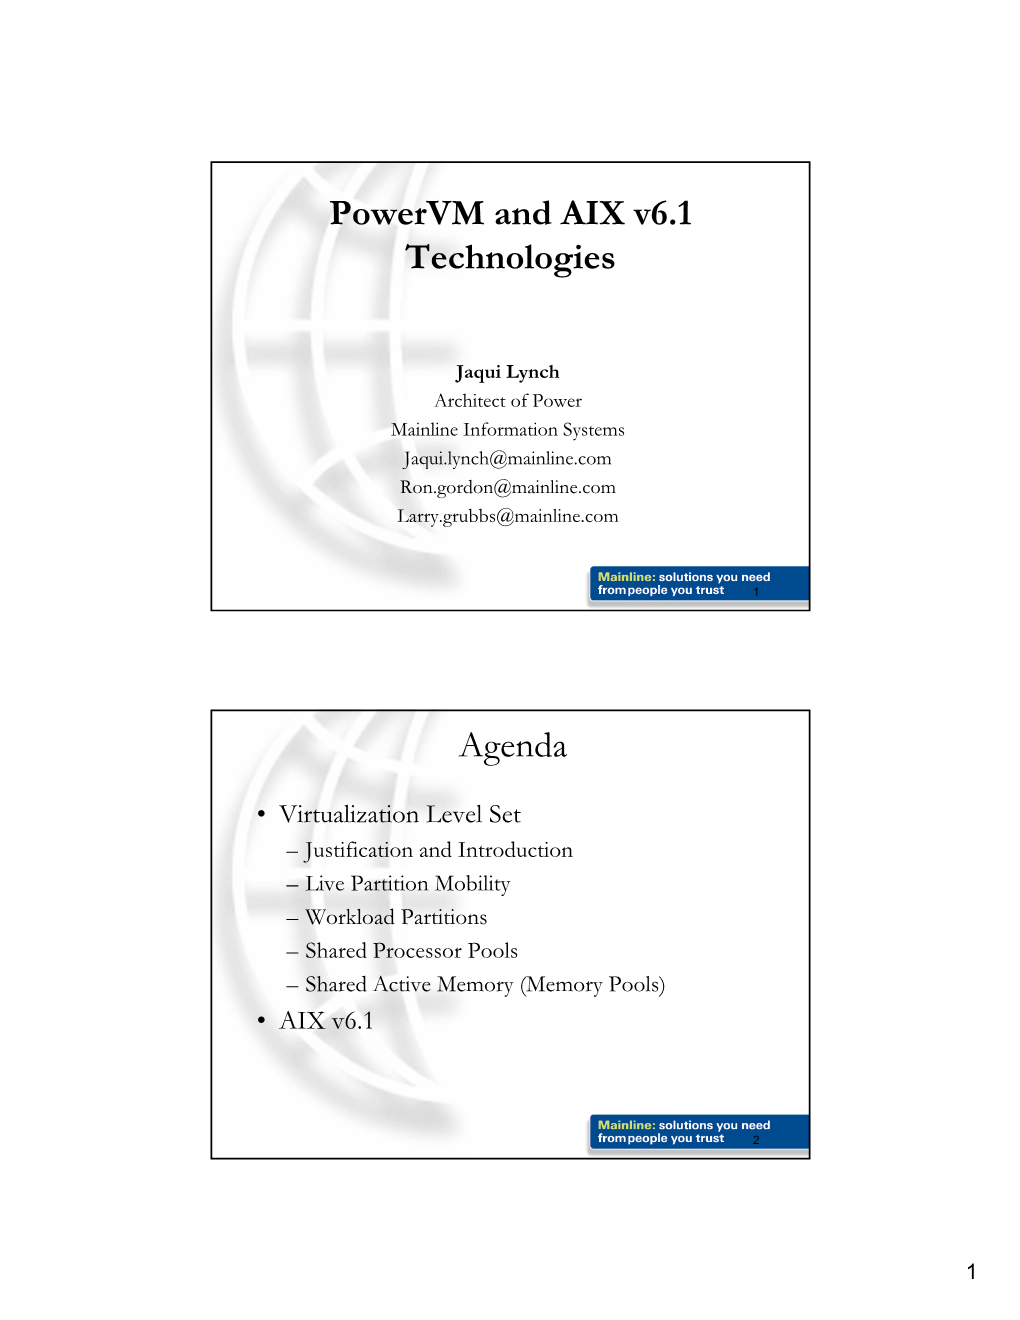 Powervm and AIX V6.1 Technologies Agenda